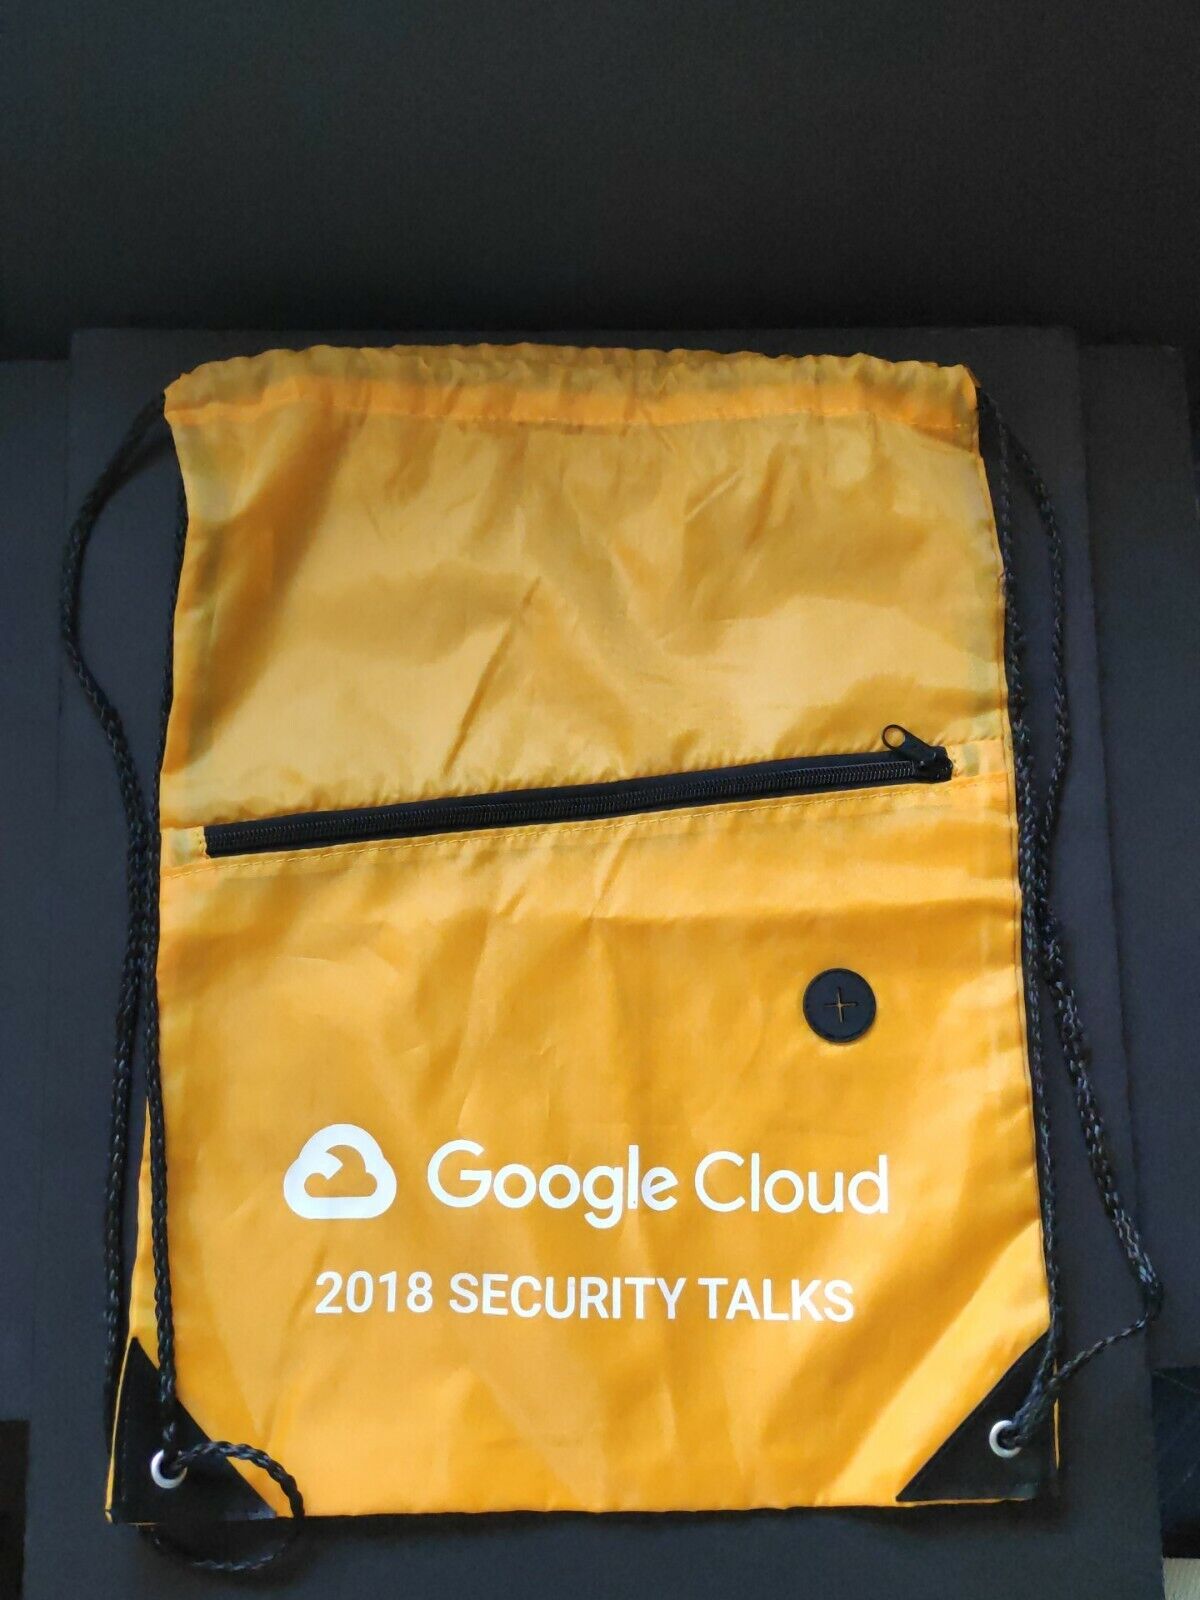 Google Cloud 2018 Drawstring Bag Logo